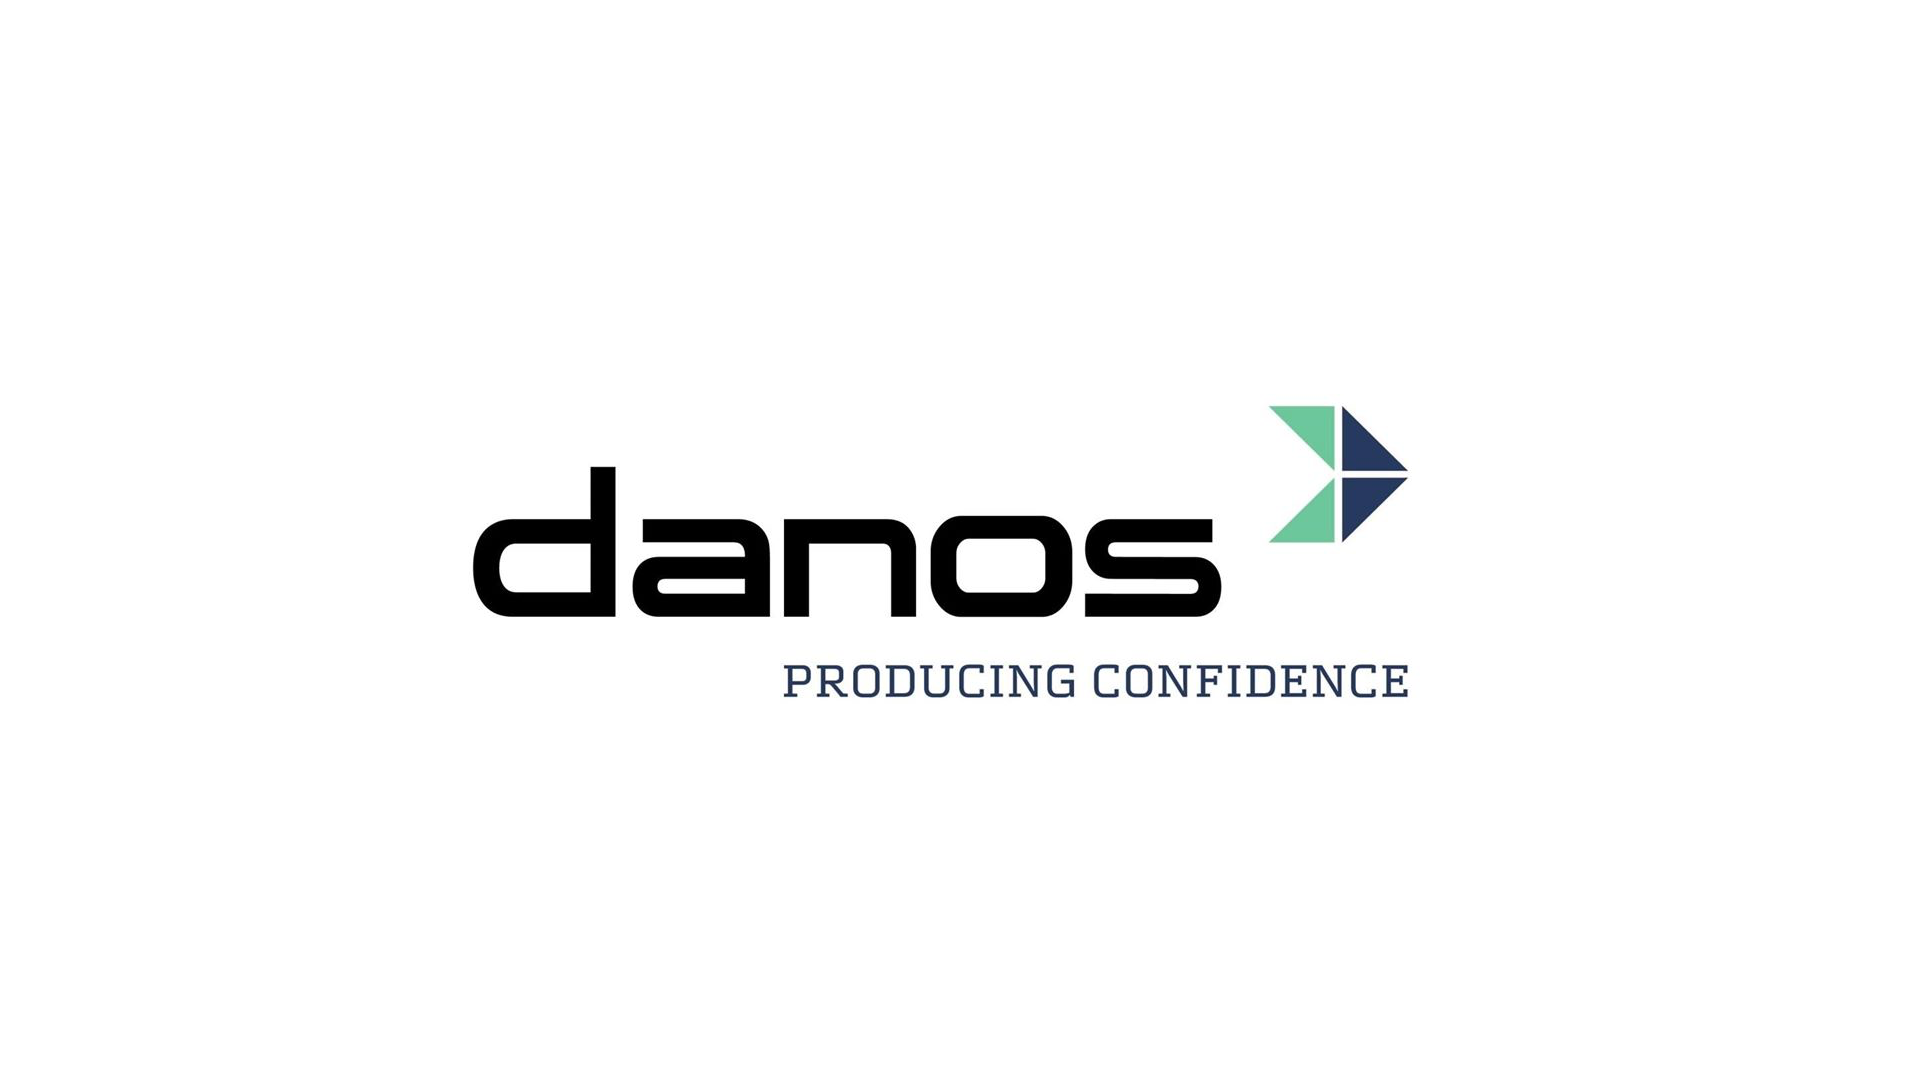 danos producing confidence